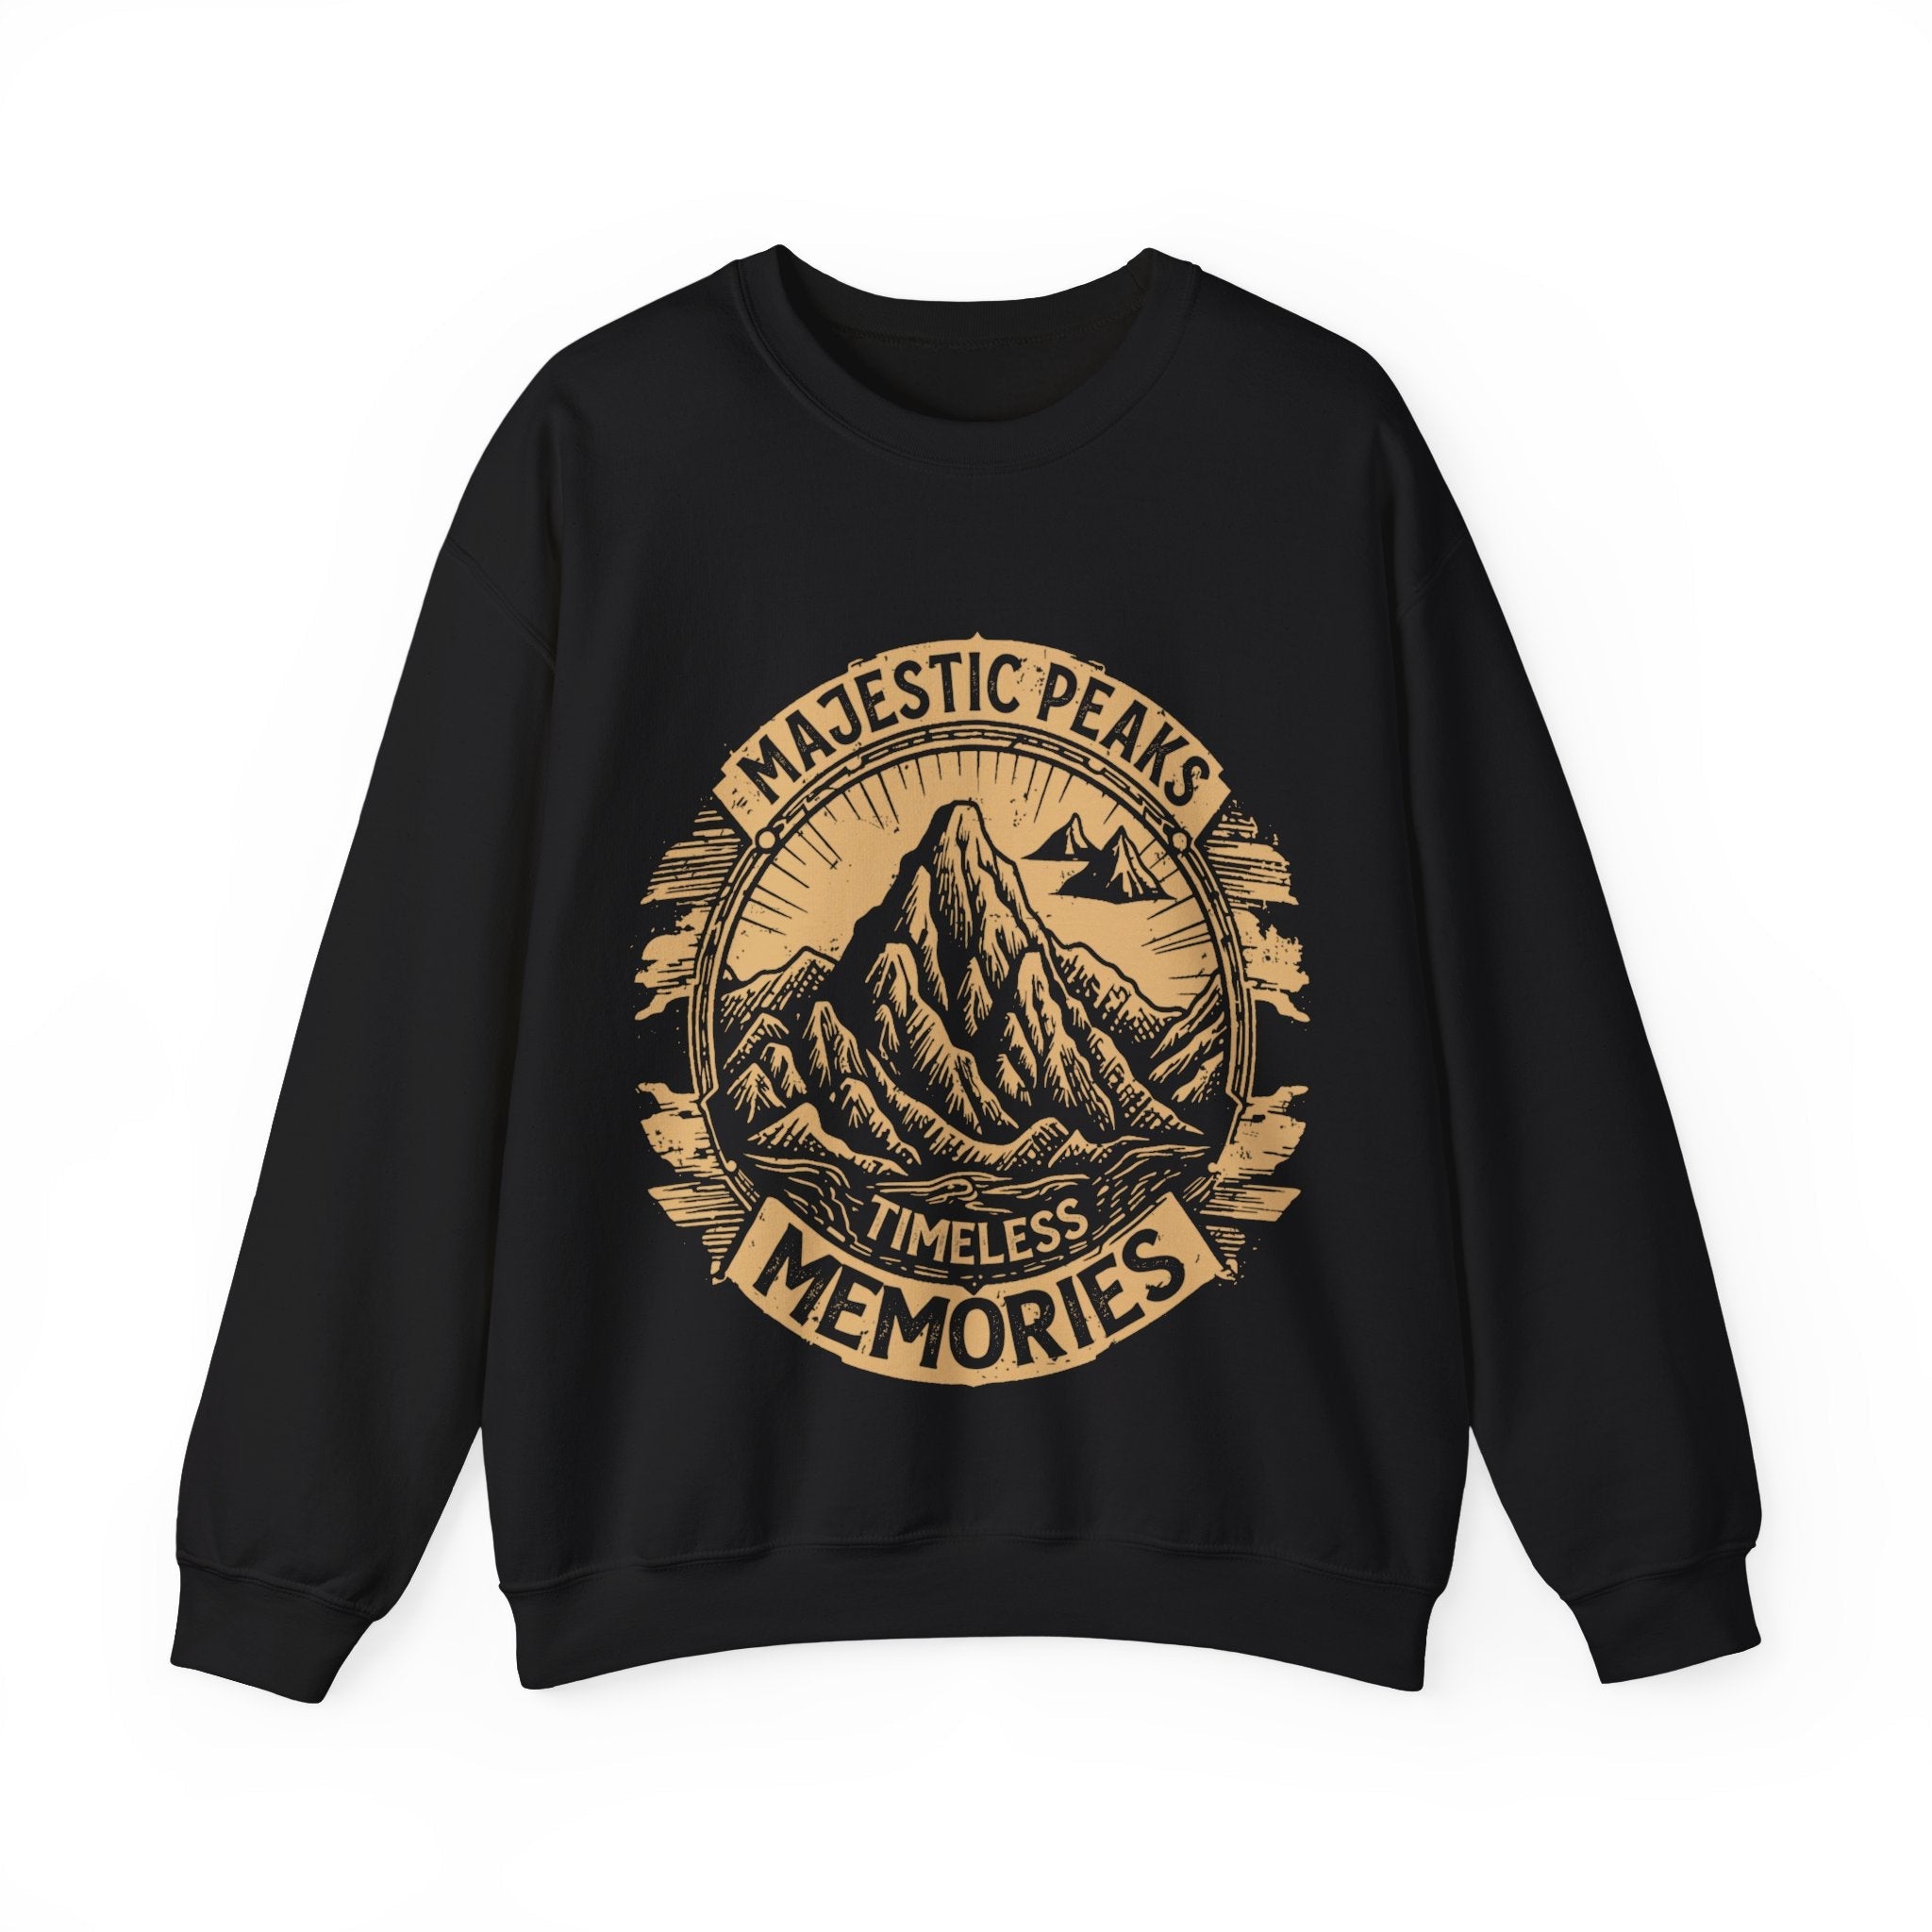 Men's "Majestic Peaks" Vintage Sweatshirt